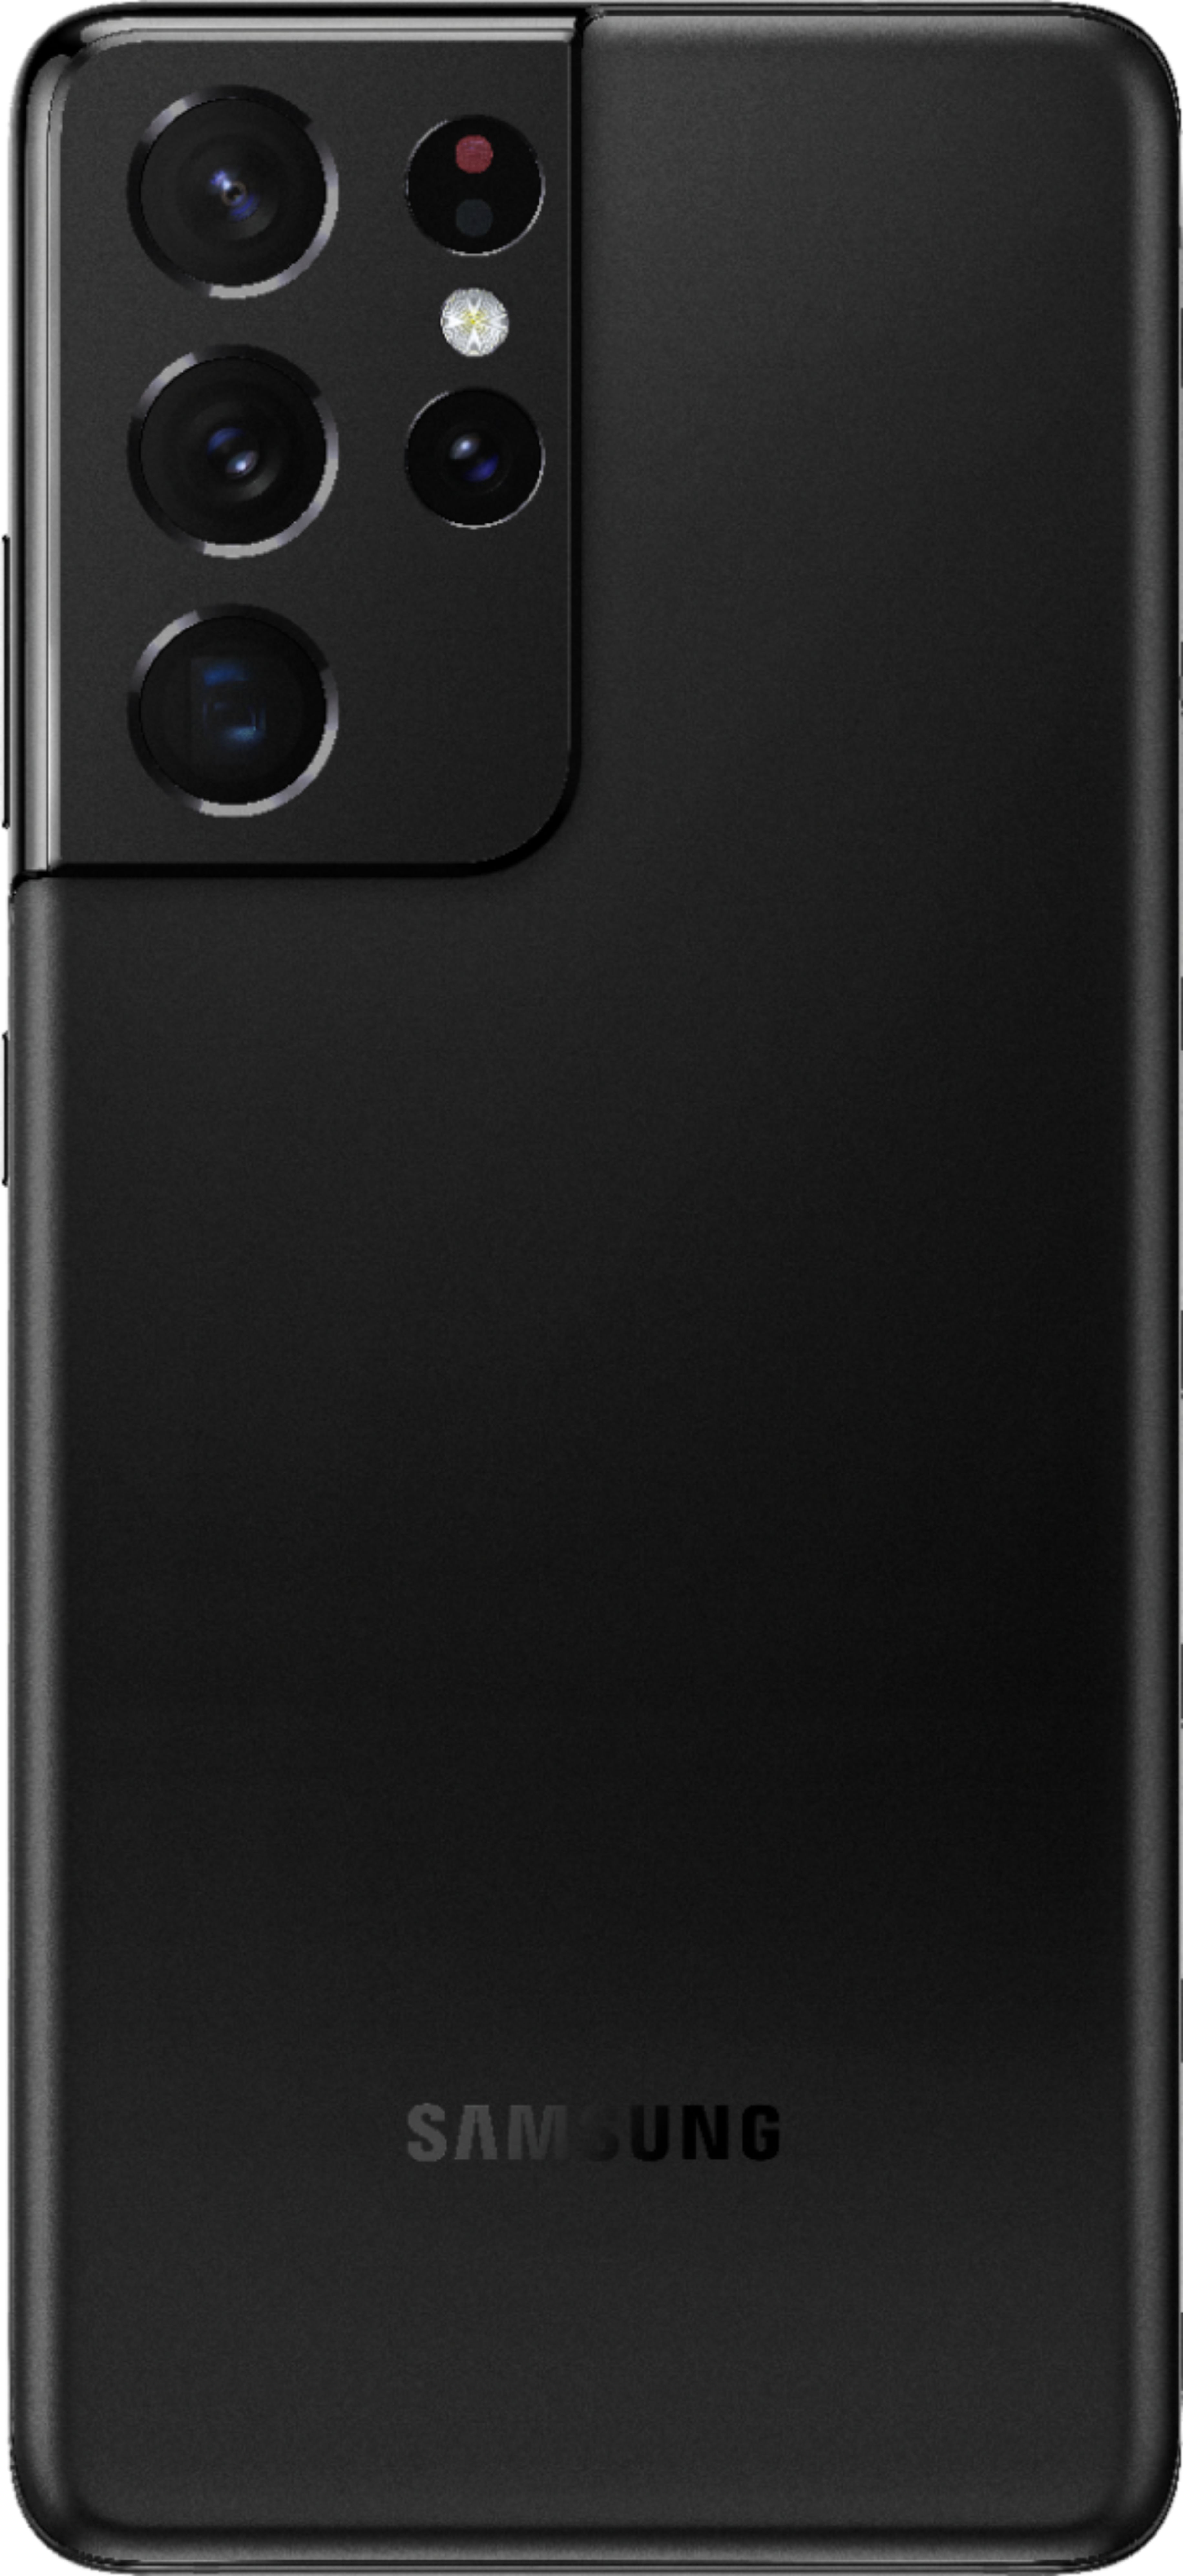 Samsung Galaxy S21 Ultra 5G 128GB Phantom Black (Sprint) SM 